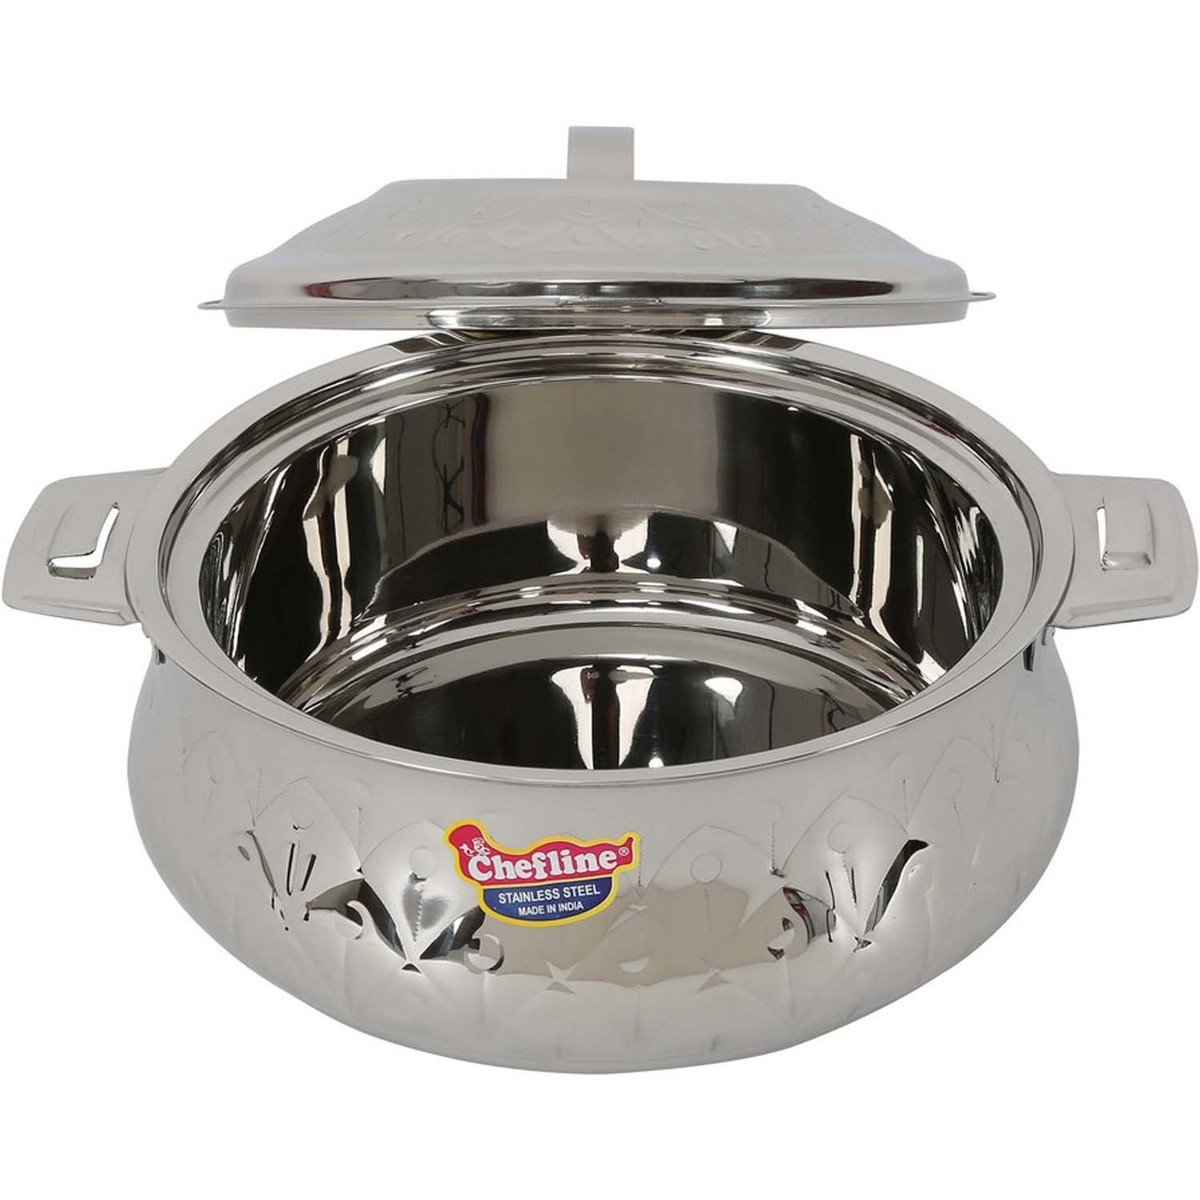 Chefline Stainless Steel Hot Pot Silver 3.5Ltr